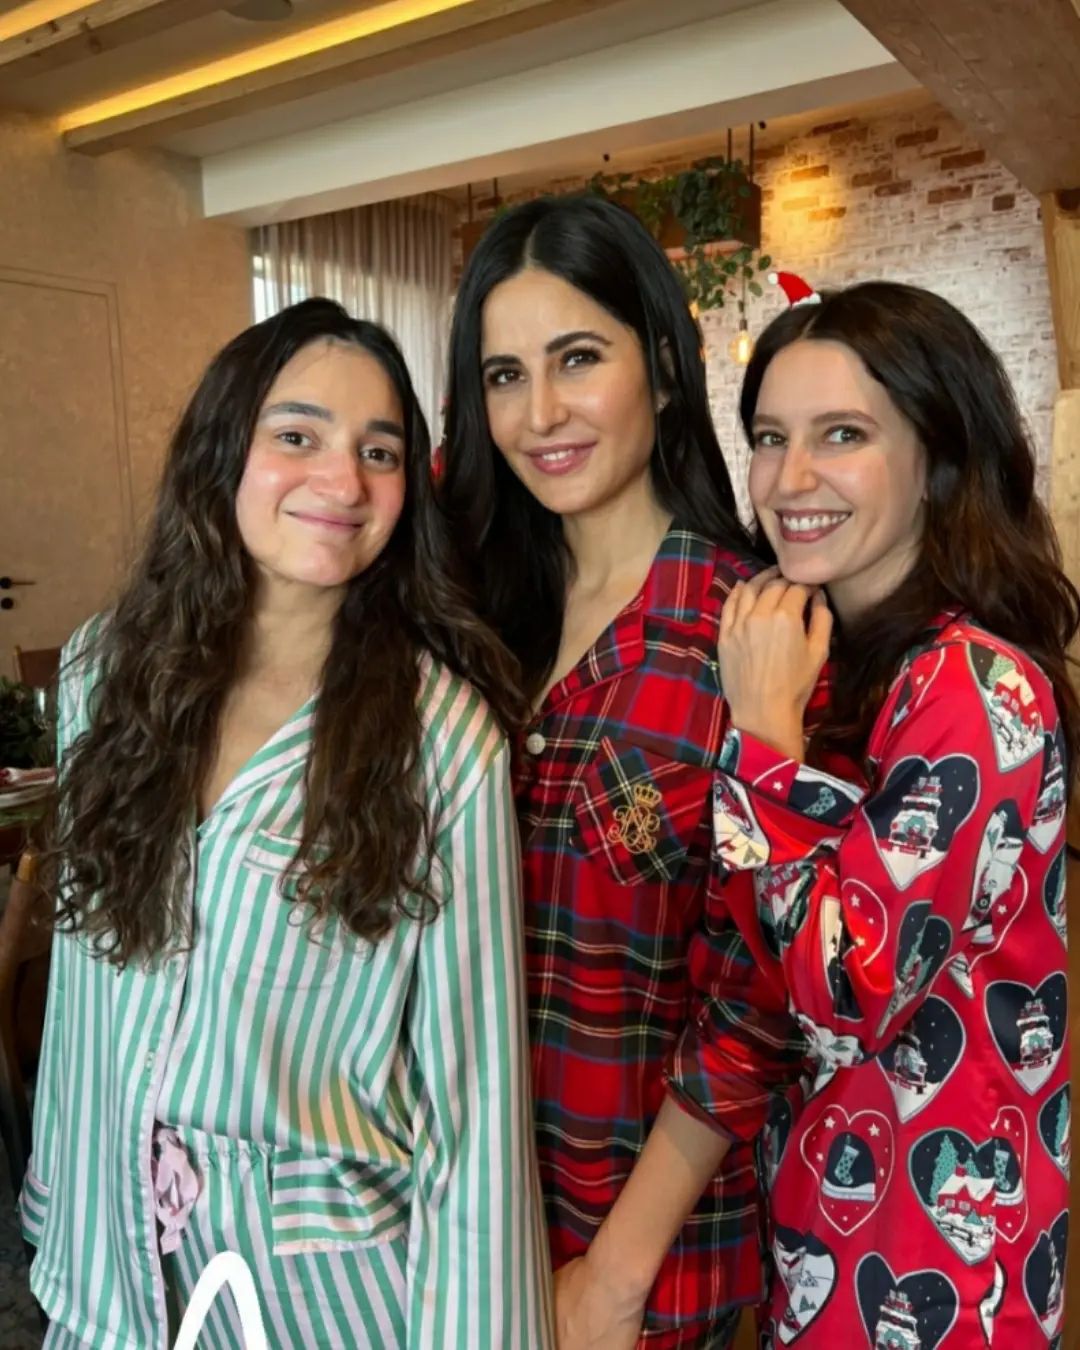 Katrina Kaif And Vicky Kaushal Celebrate Christmas With Family And Friends